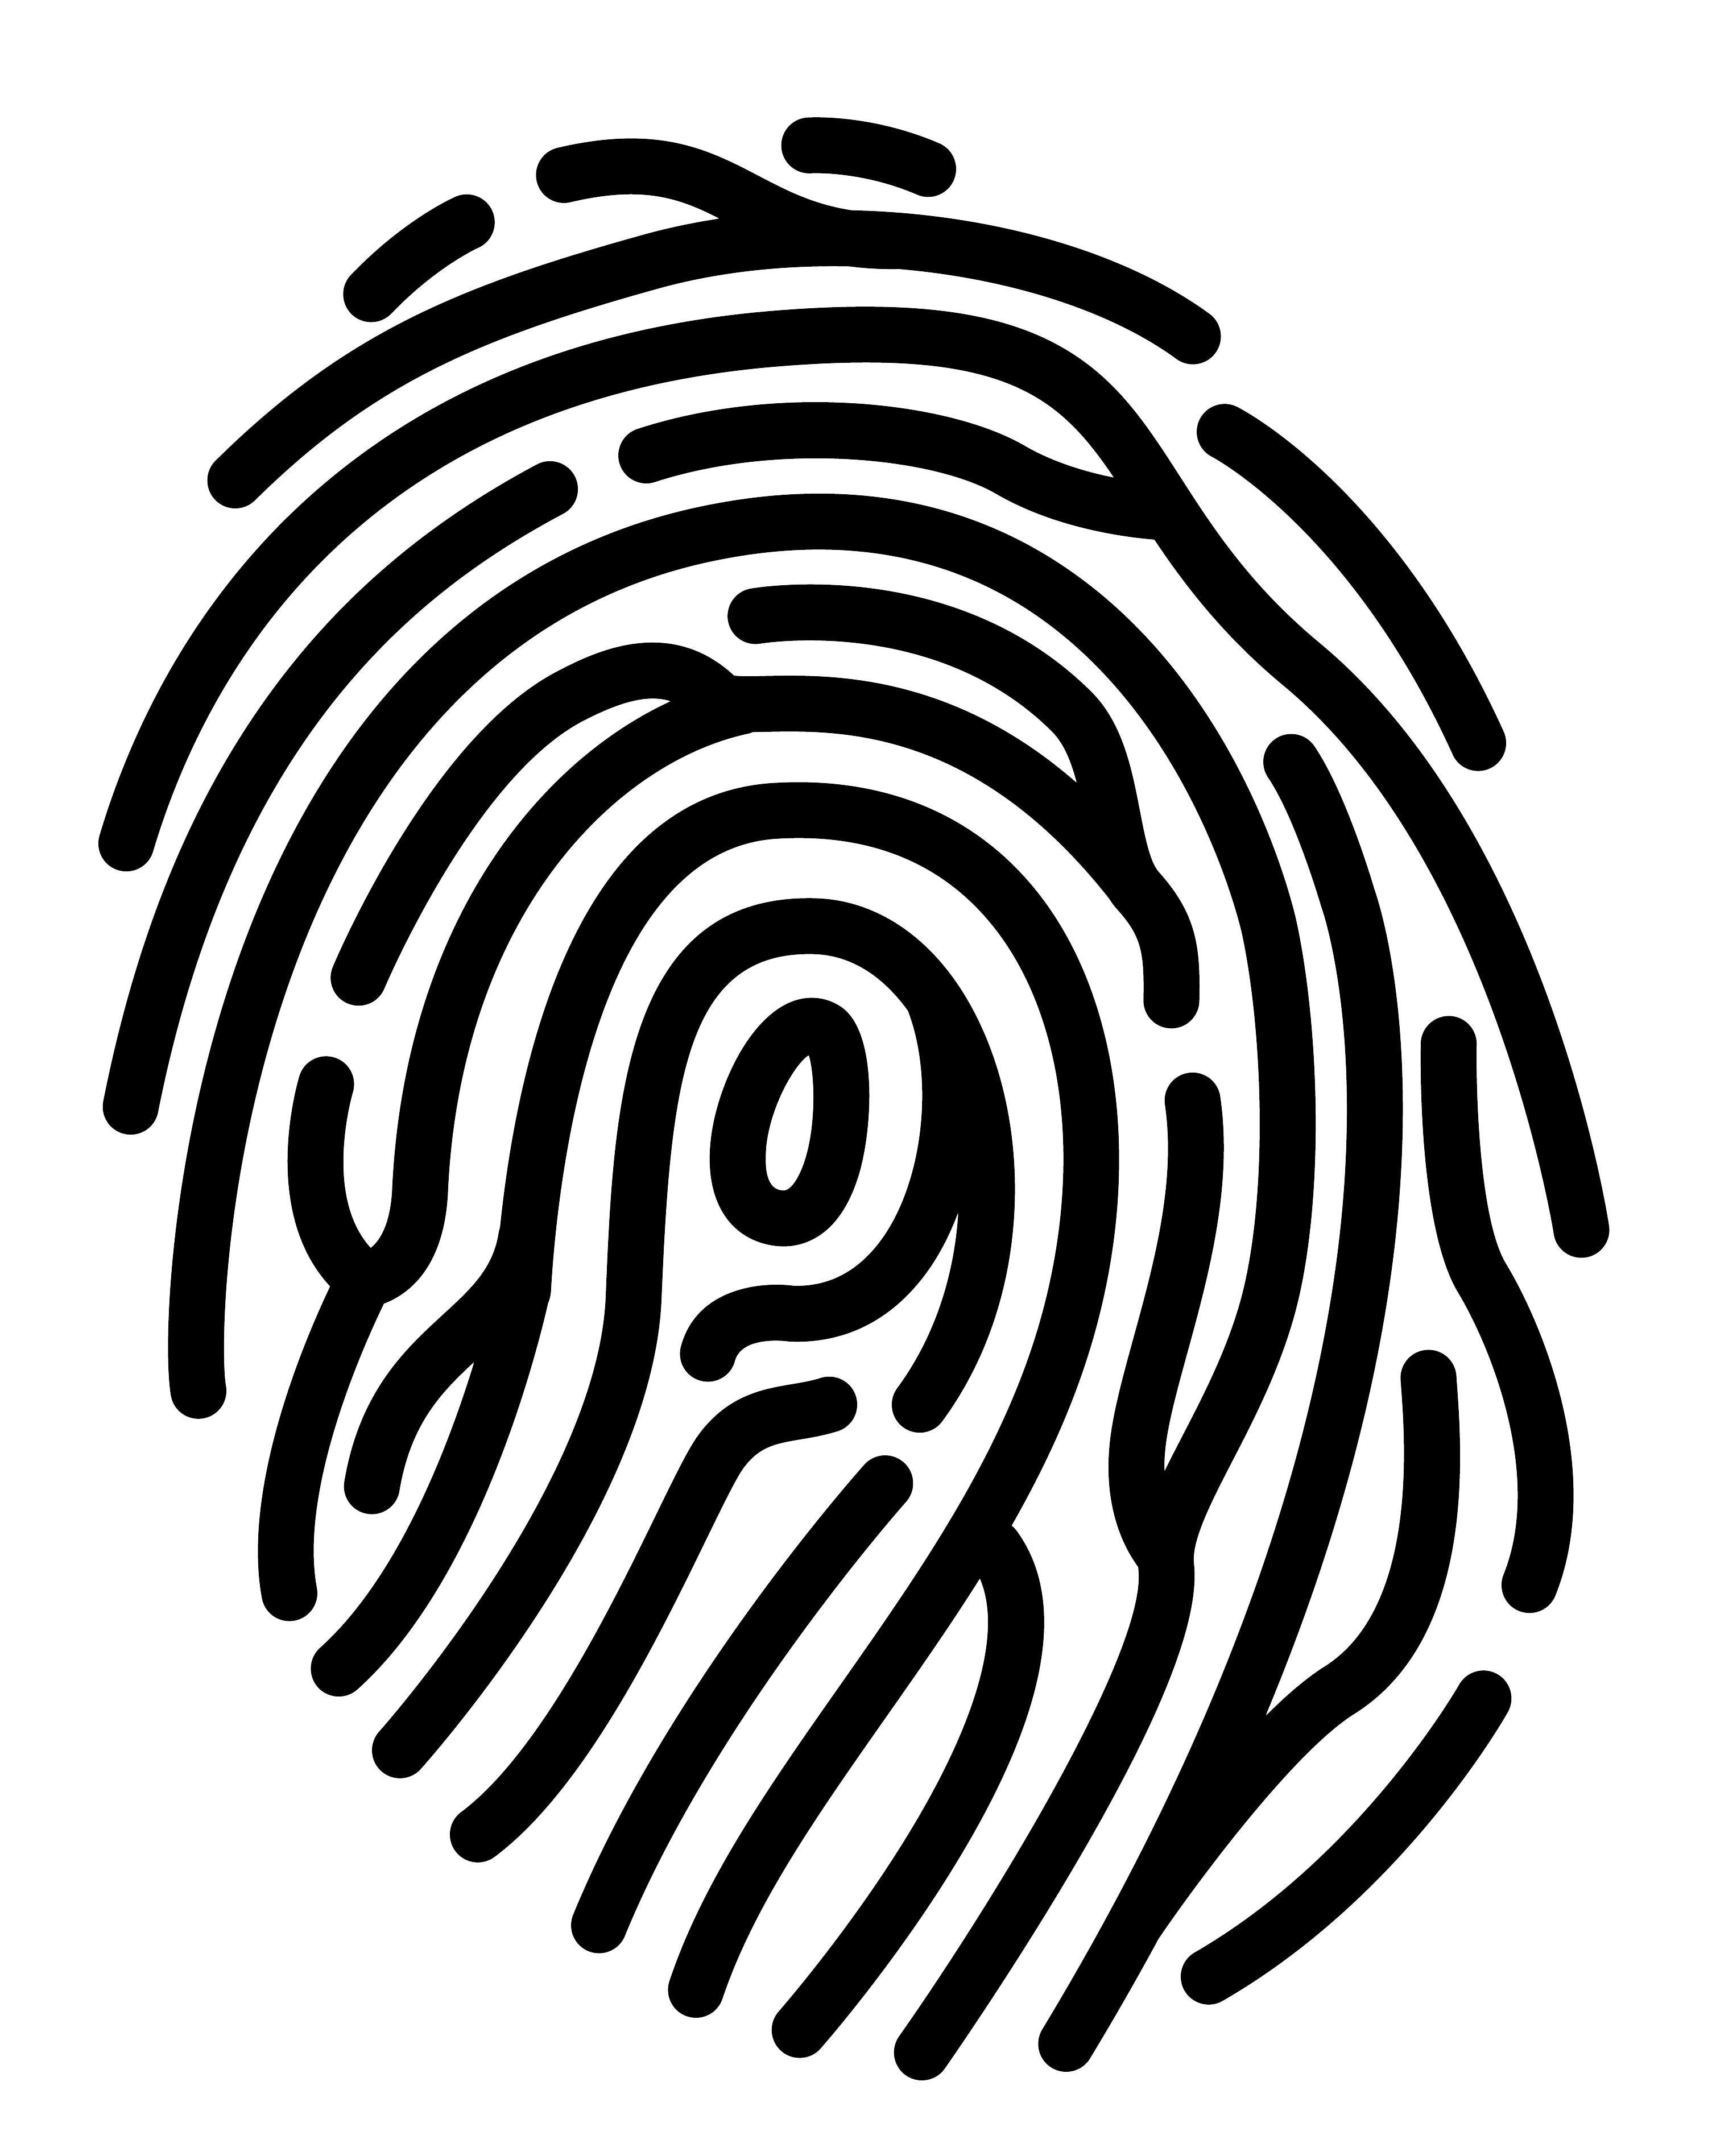 Fingerprint Silhouette PNG Image